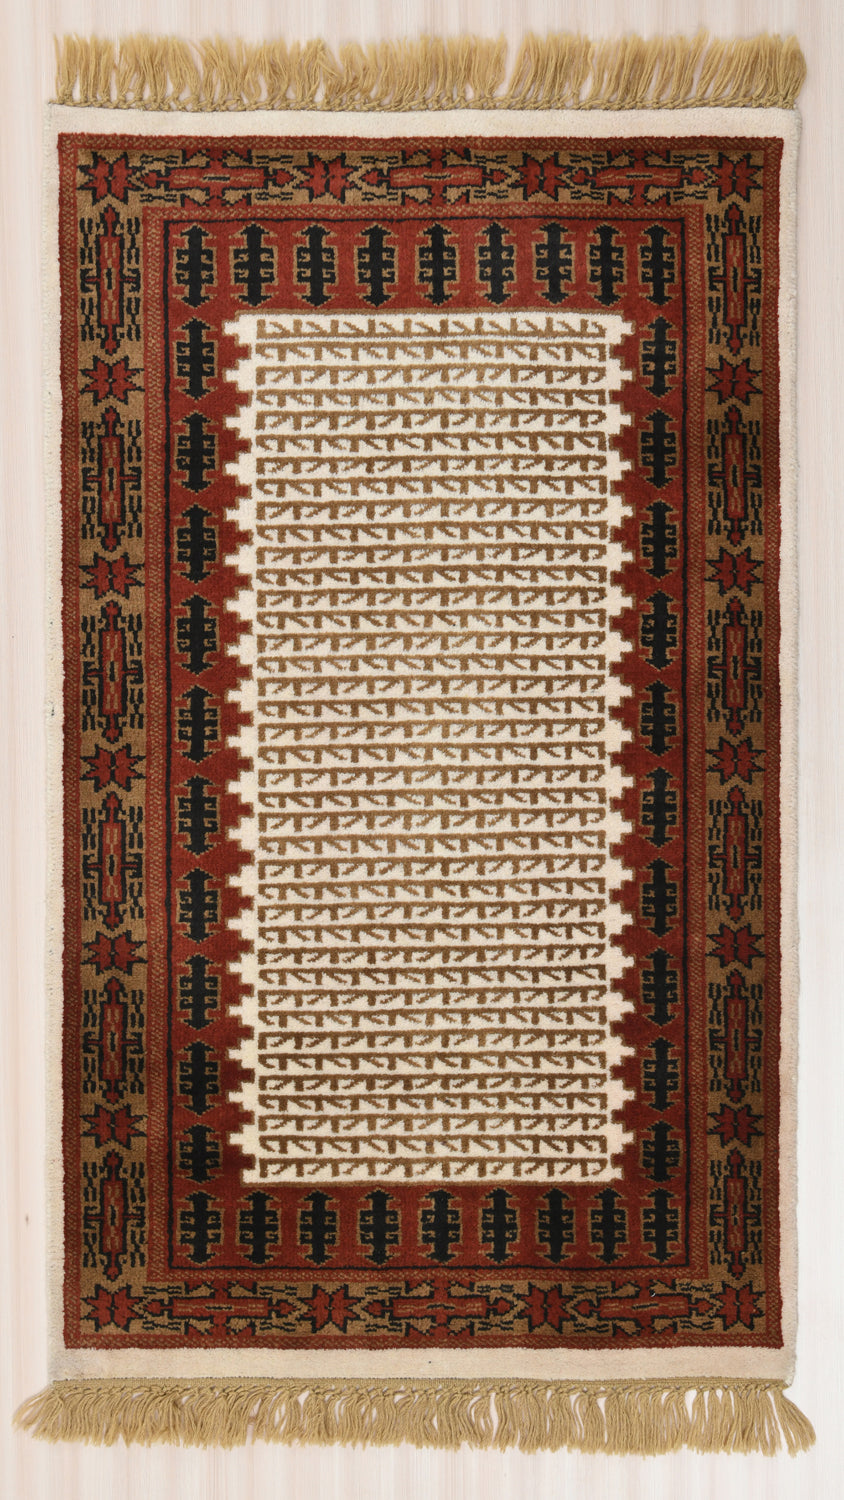 PECOCK – Channi Carpets